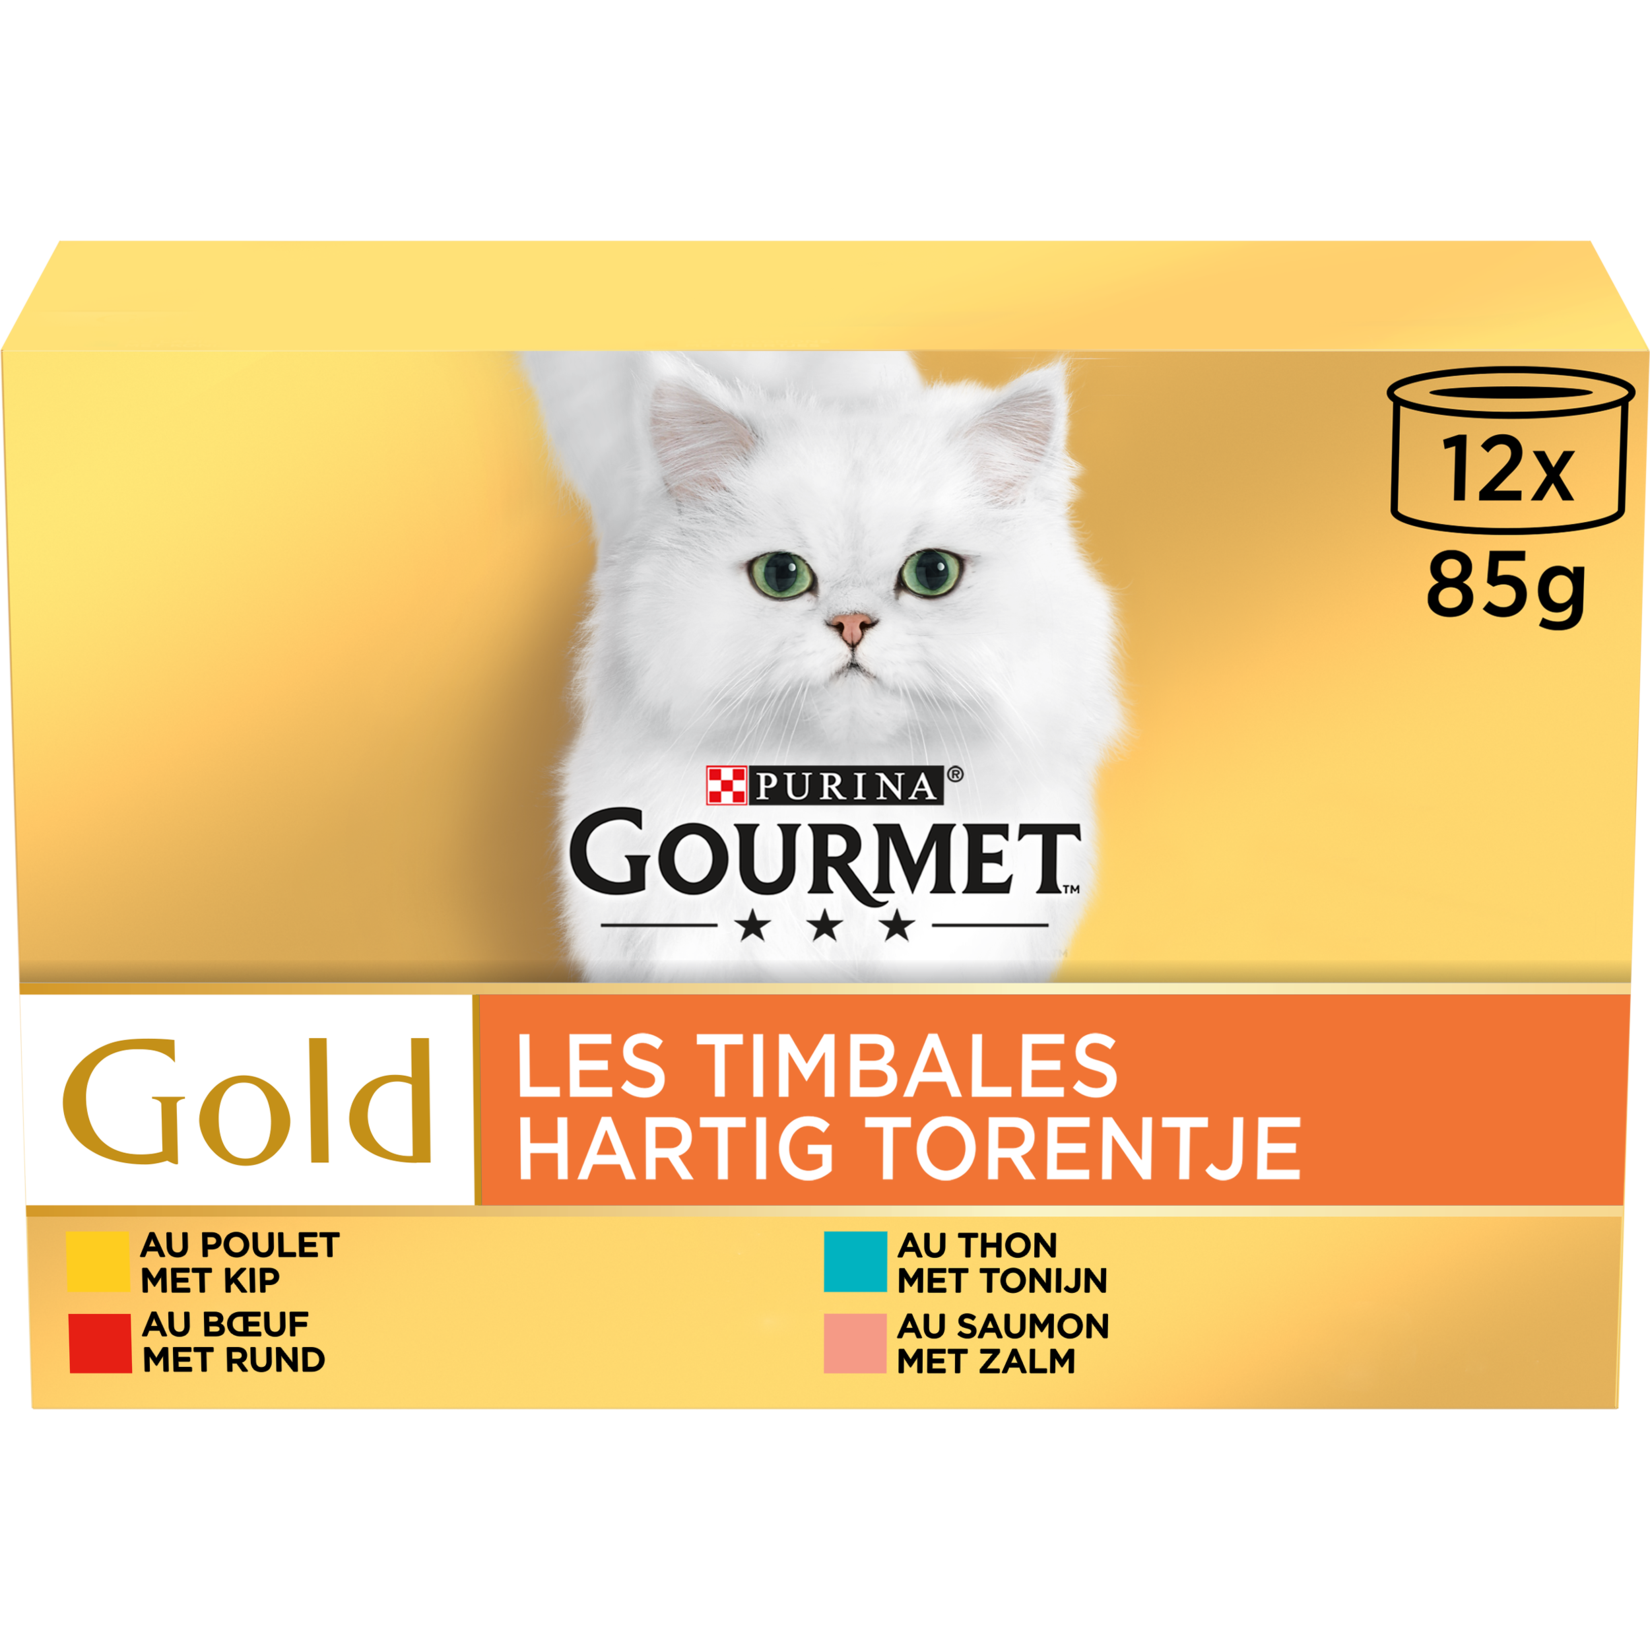 Gourmet gold les timbales  12x85g offre à 10,59€ sur Tom & Co